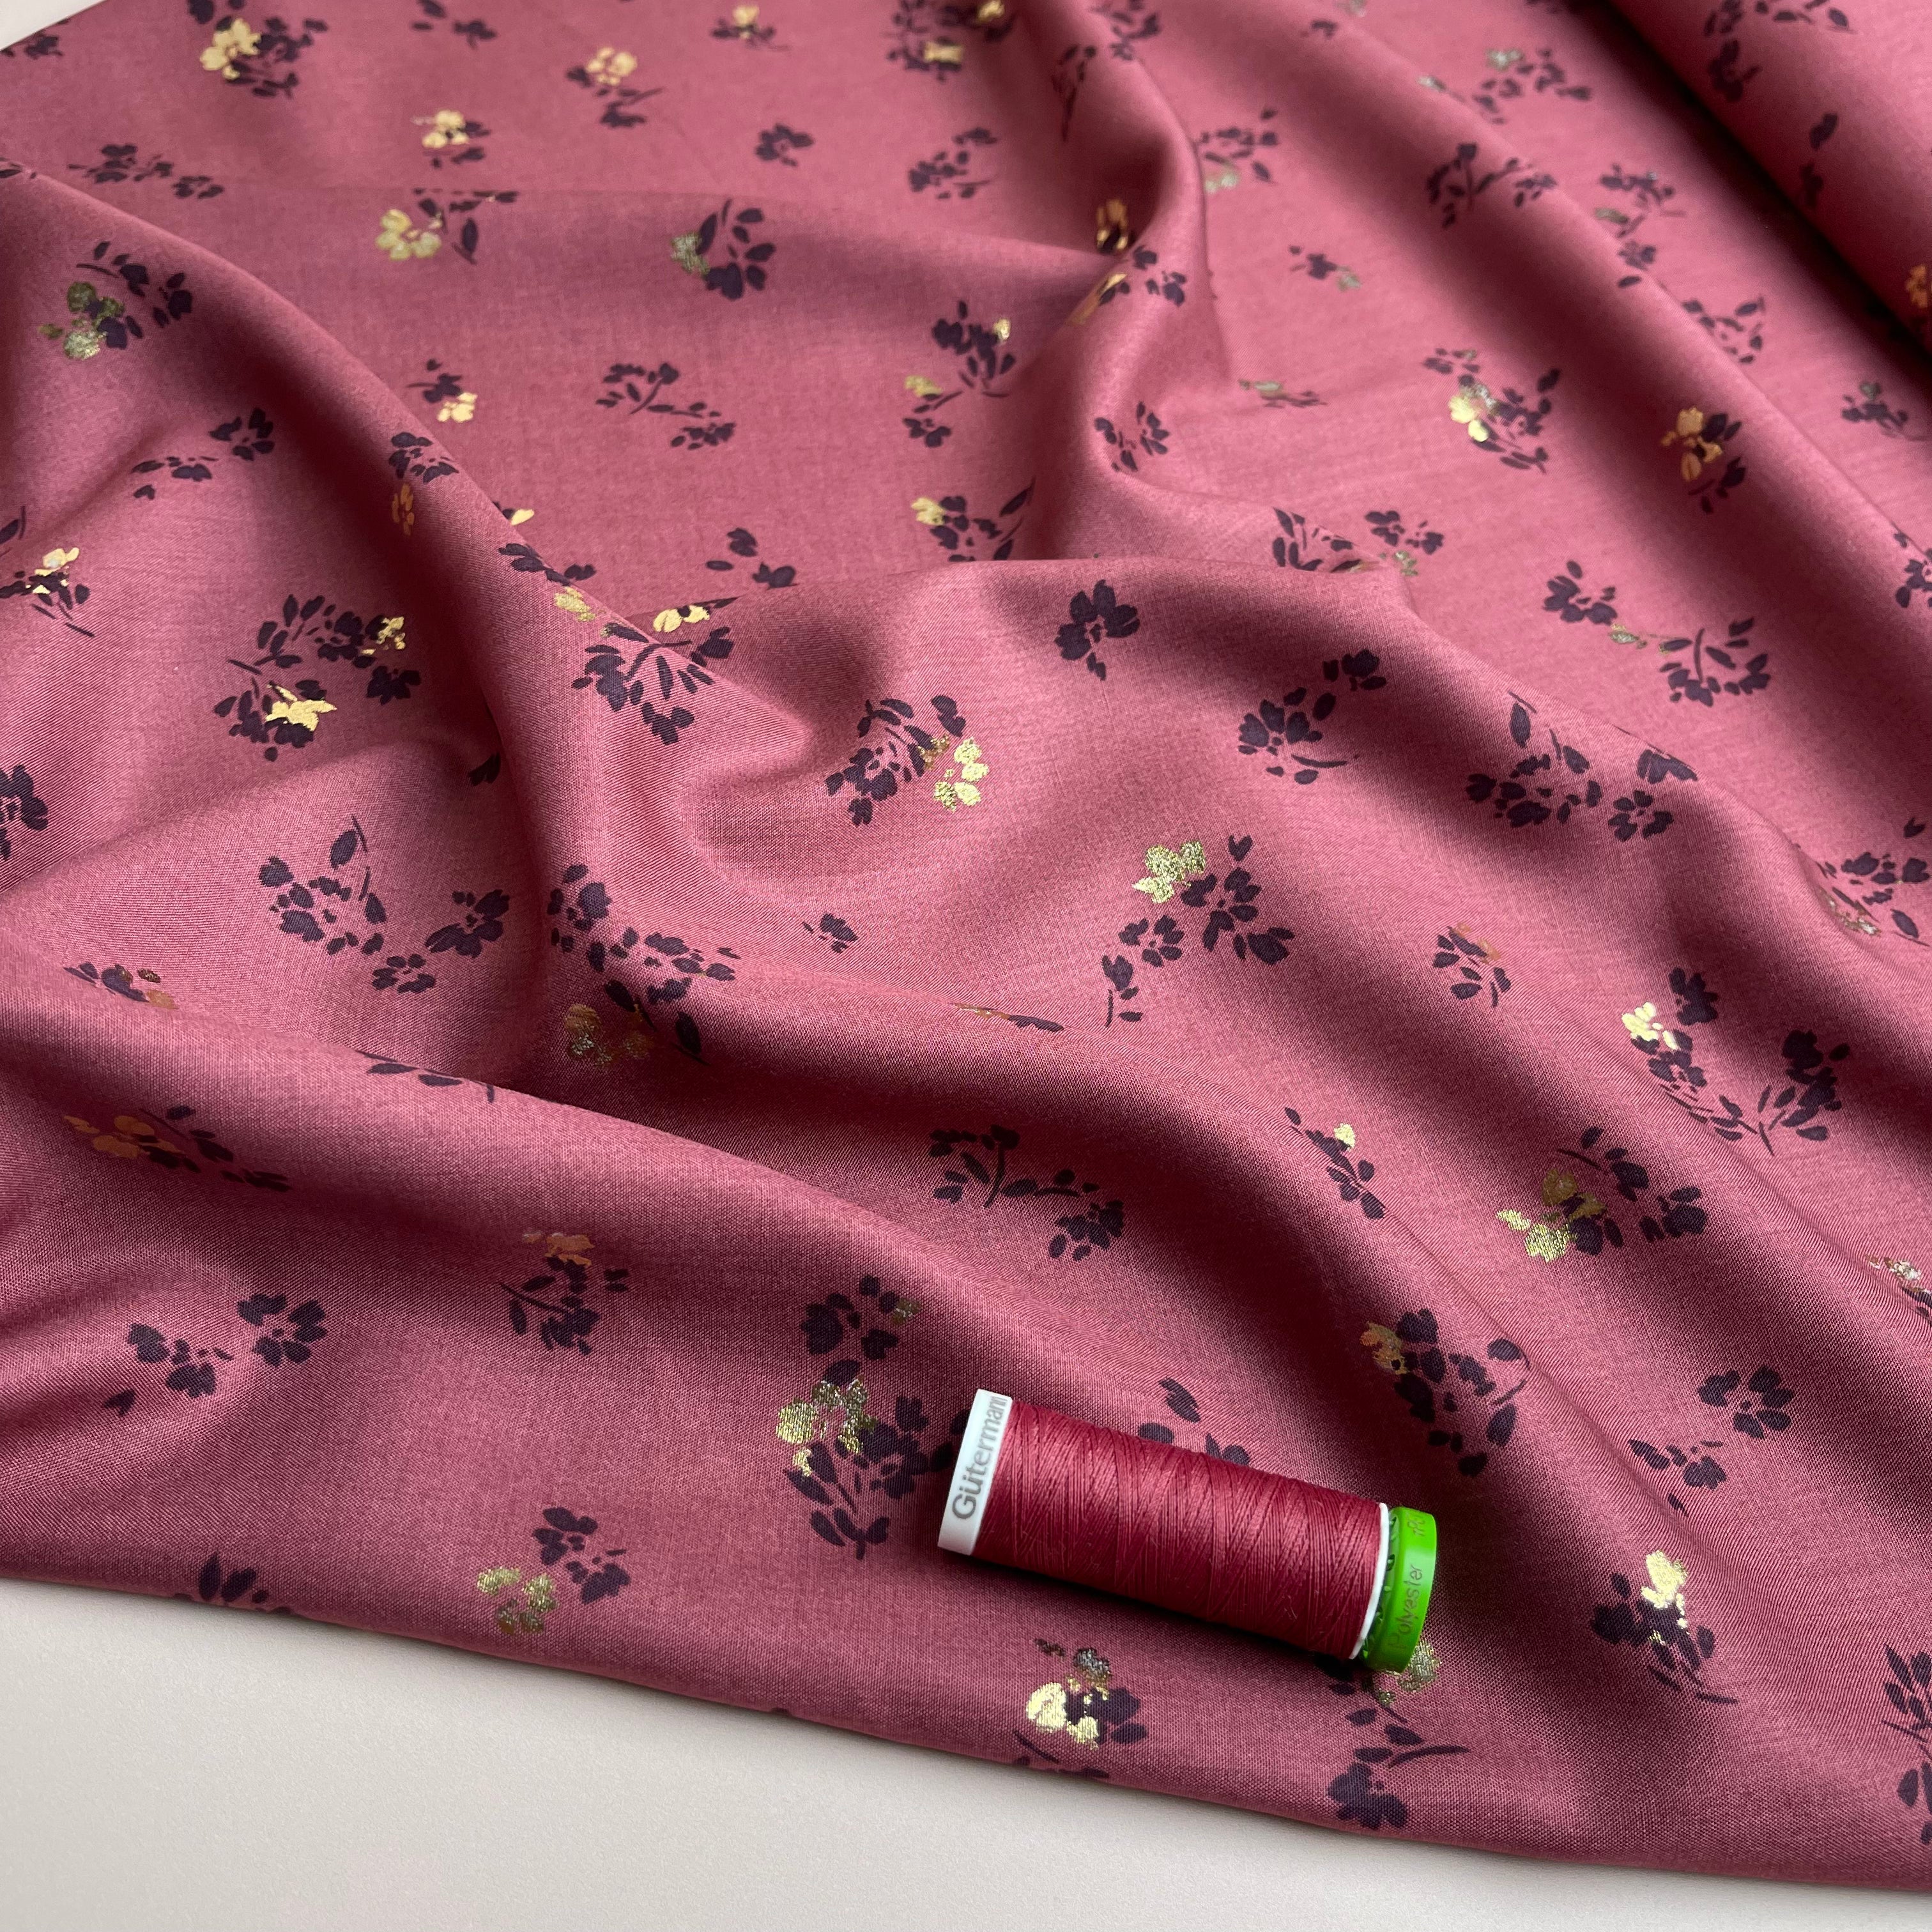 Sewing Kit - Soeurette Dress Sewing Kit in Sparkle Flowers Viscose